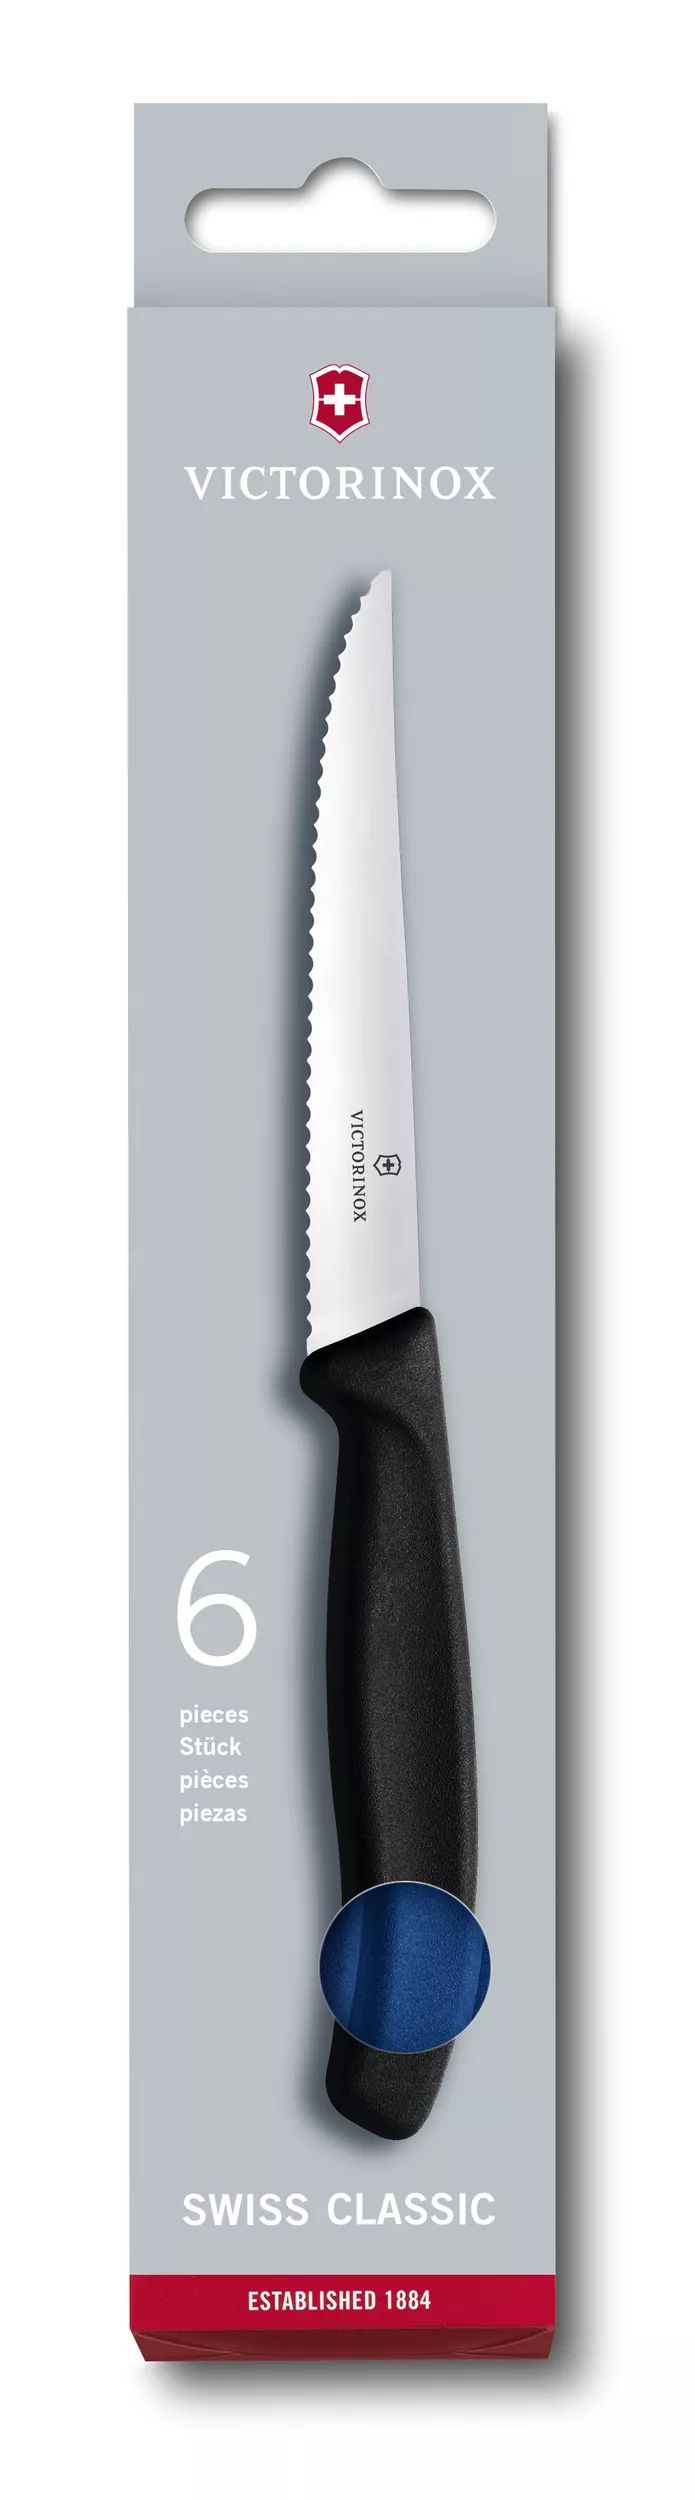 Swiss Classic Steak Knife Set, 6 pieces-6.7232.6